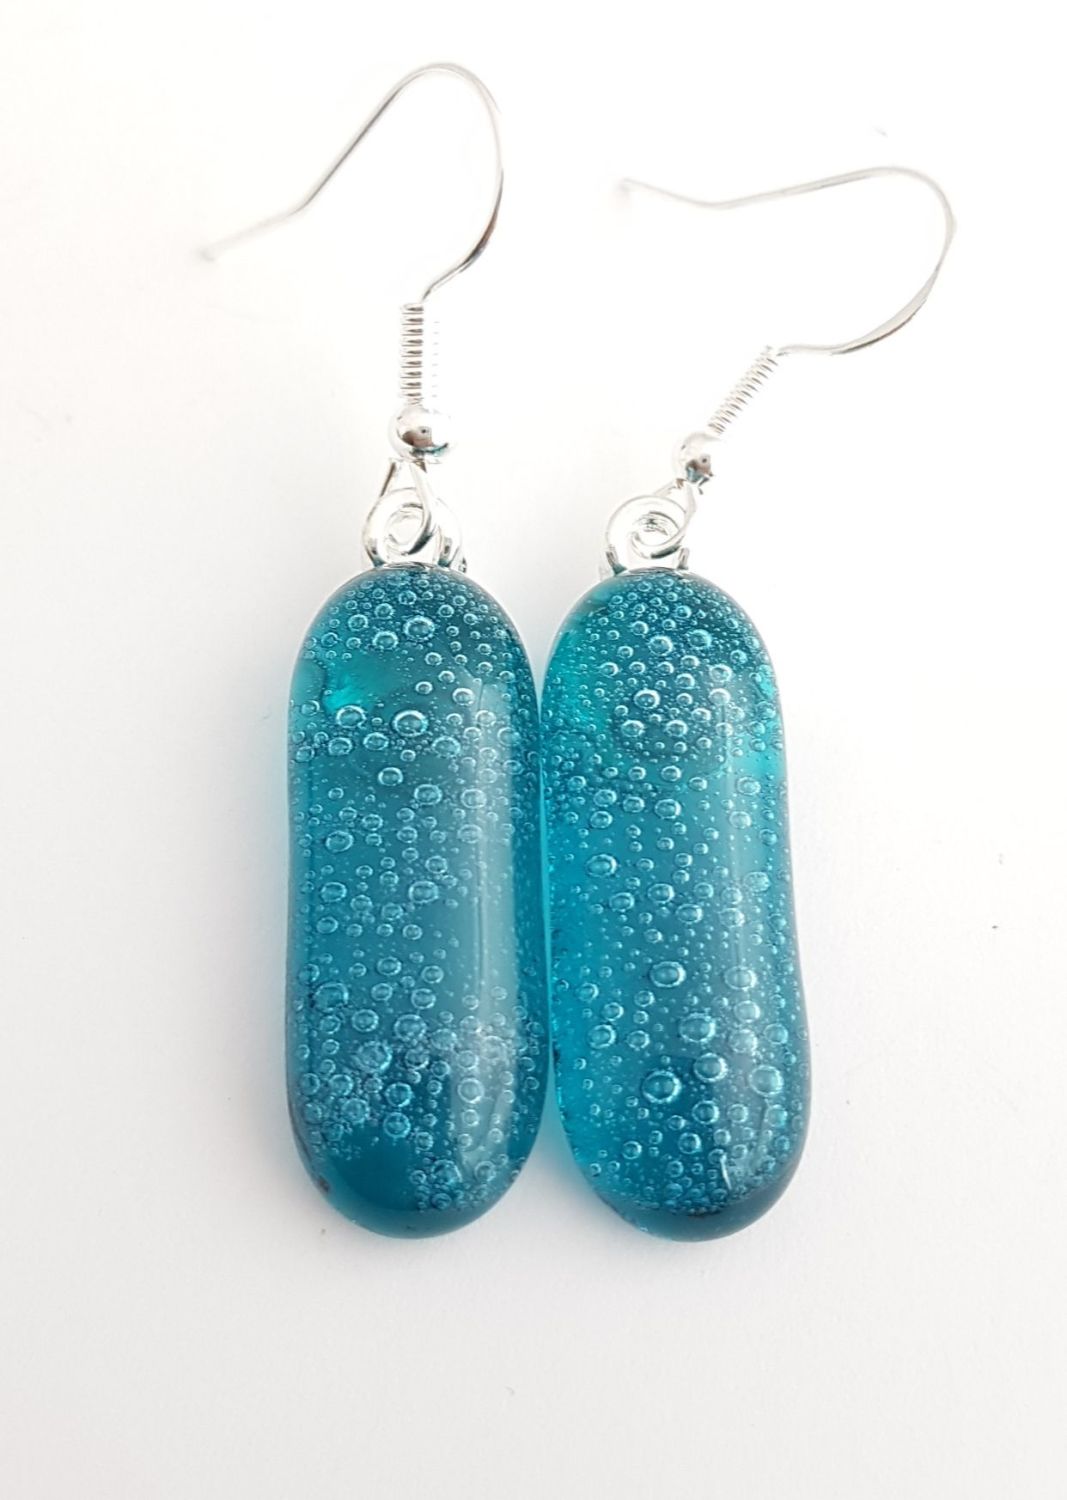 Bubbles - Peacock blue bubbles long drop earrings